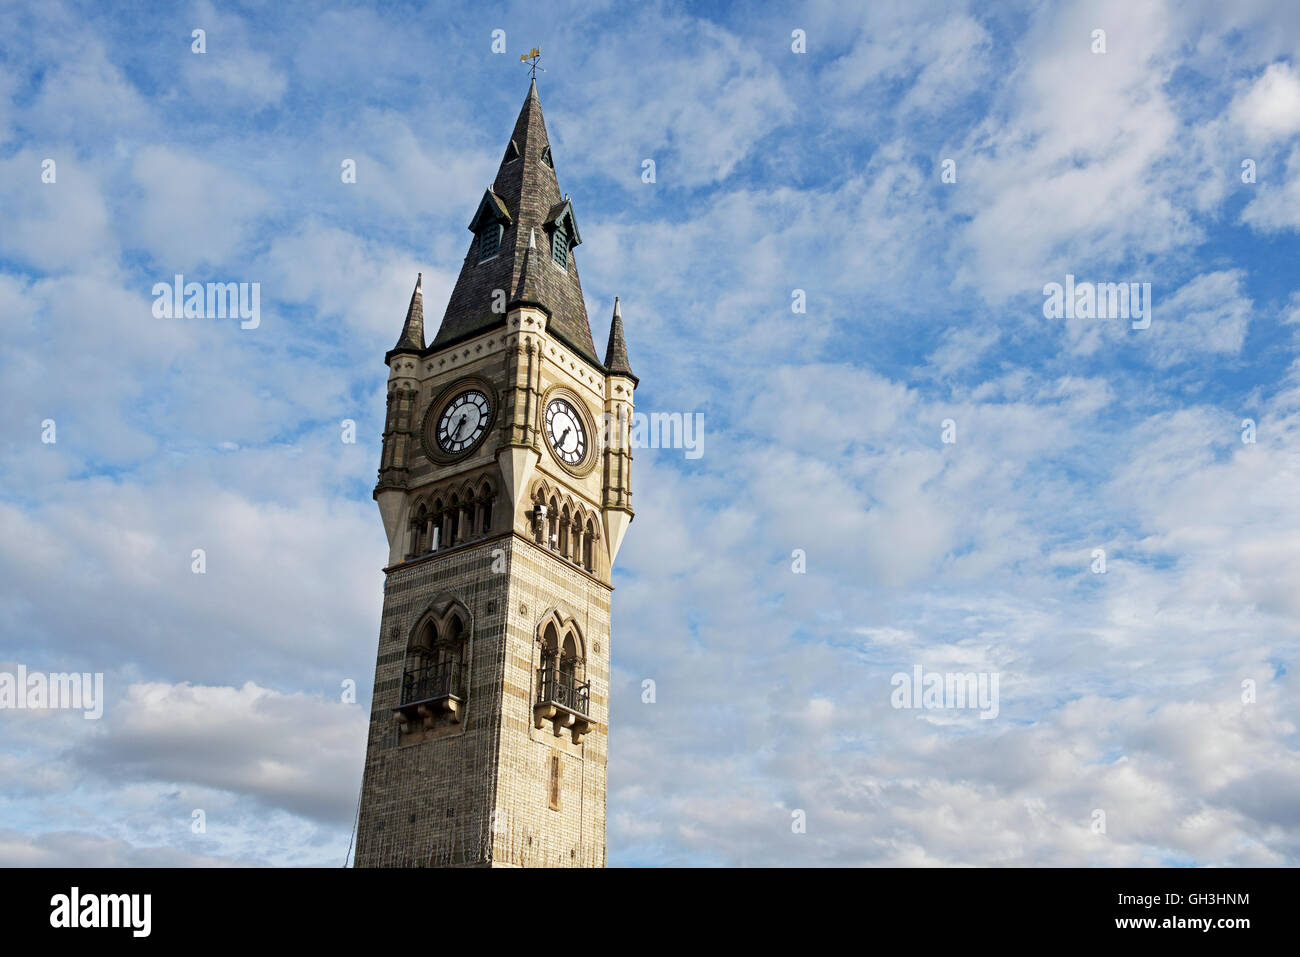 The clock tower, Darlington, County Durham, England UK Stock Photo